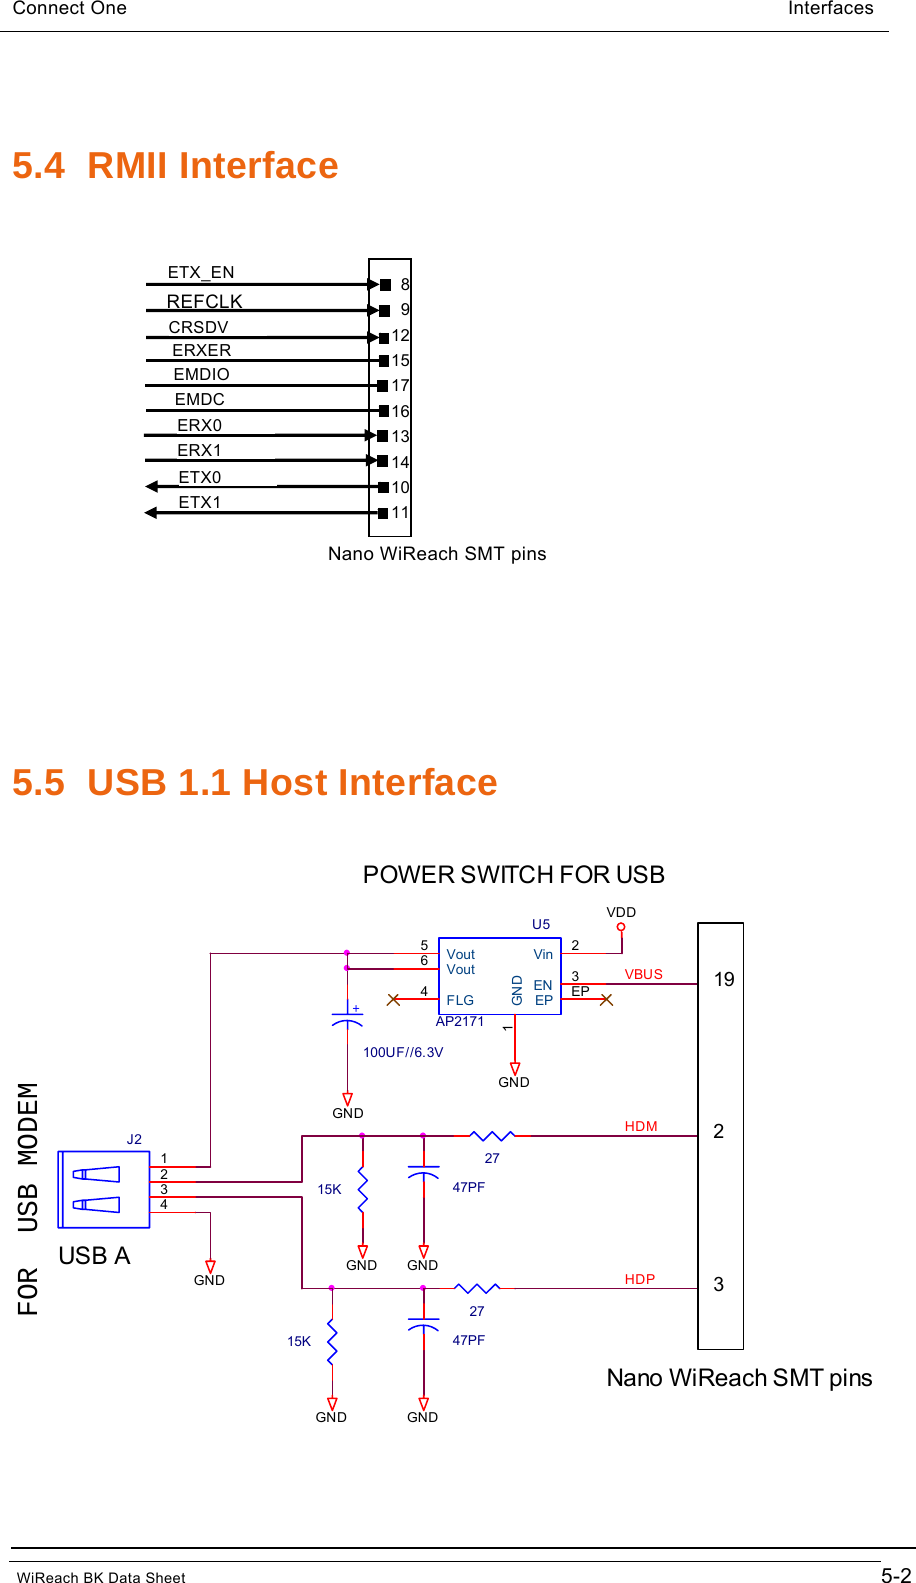 Connect One                                                            Interfaces     5.4 RMII Interface   ETX_EN REFCLK CRSDV Nano WiReach SMT pins101114131617158912EMDC ERX0 ERX1 ETX0 ETX1 EMDIO ERXER              5.5  USB 1.1 Host Interface  +100UF//6.3VHDMGNDGNDGND15K27HDP2747PFGNDGND47PF15KFOR  USB MODEMJ21234GNDU5AP2171Vin 2Vout5Vout6EN 3VDDVBUSGND1FLG4EP EPGND2193POWER SWITCH FOR USBUSB ANano WiReach SMT pins WiReach BK Data Sheet                                         5-2 